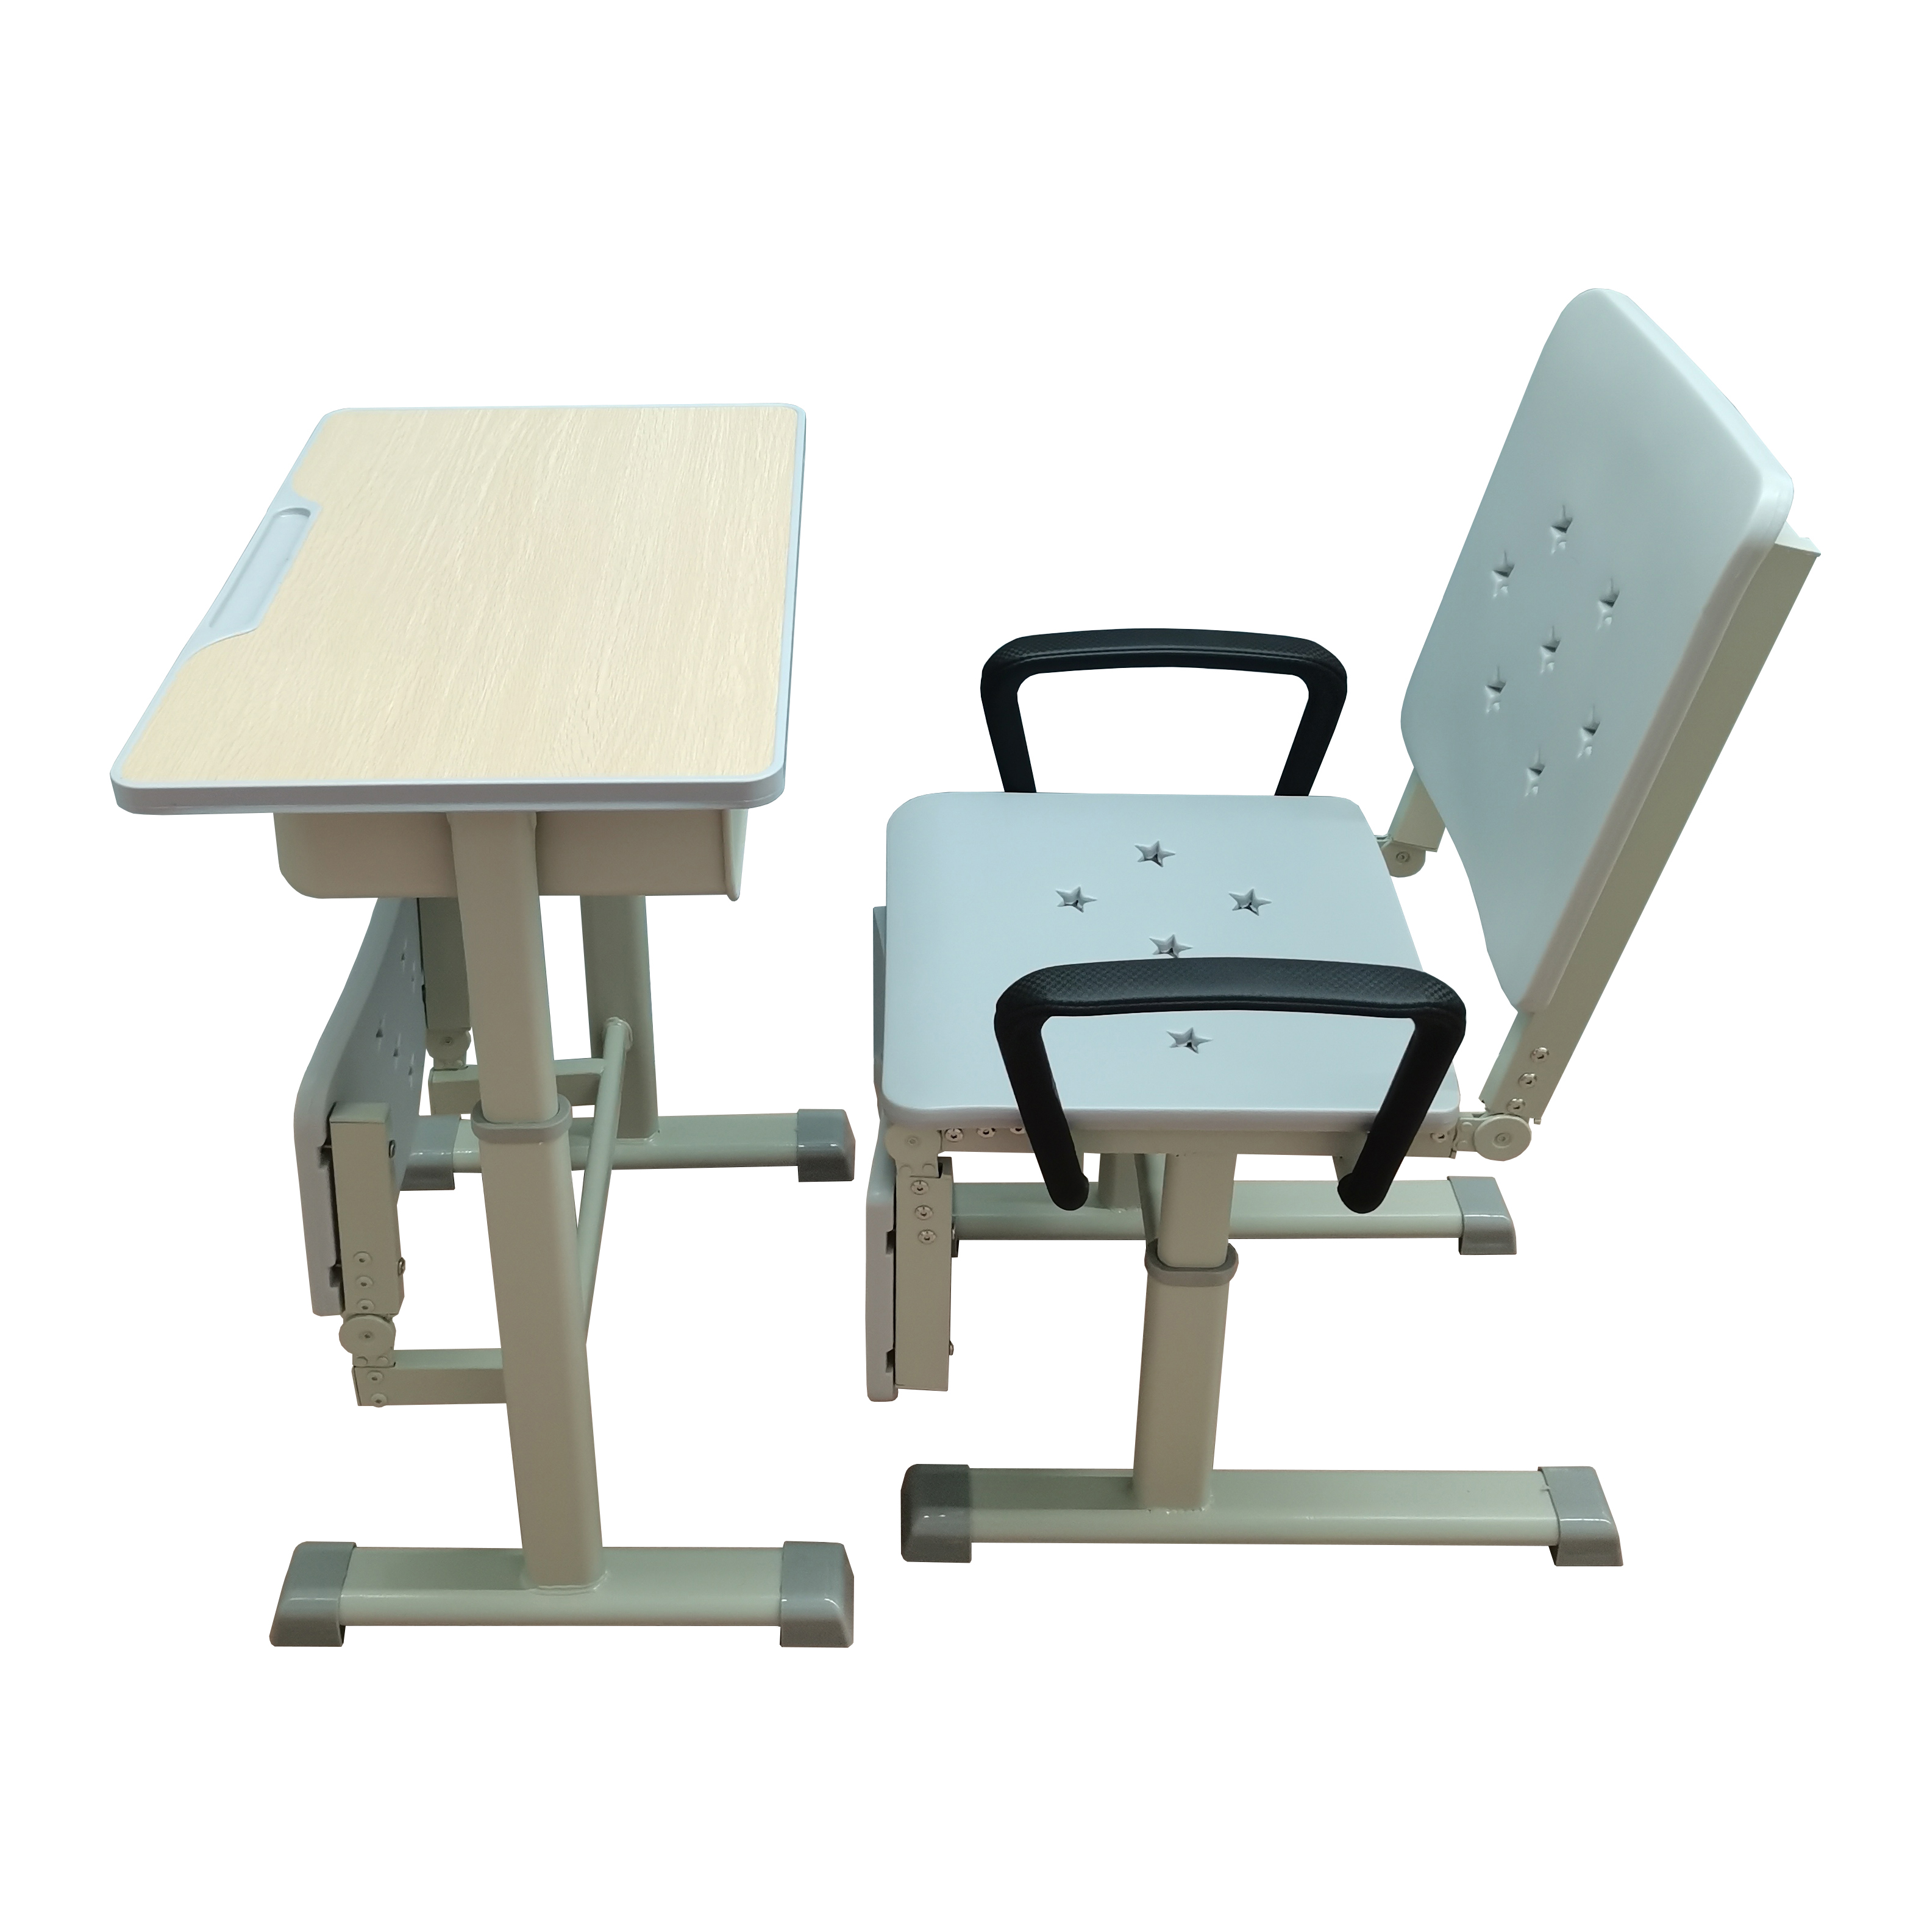 Lunch break desk and chair CH-W001